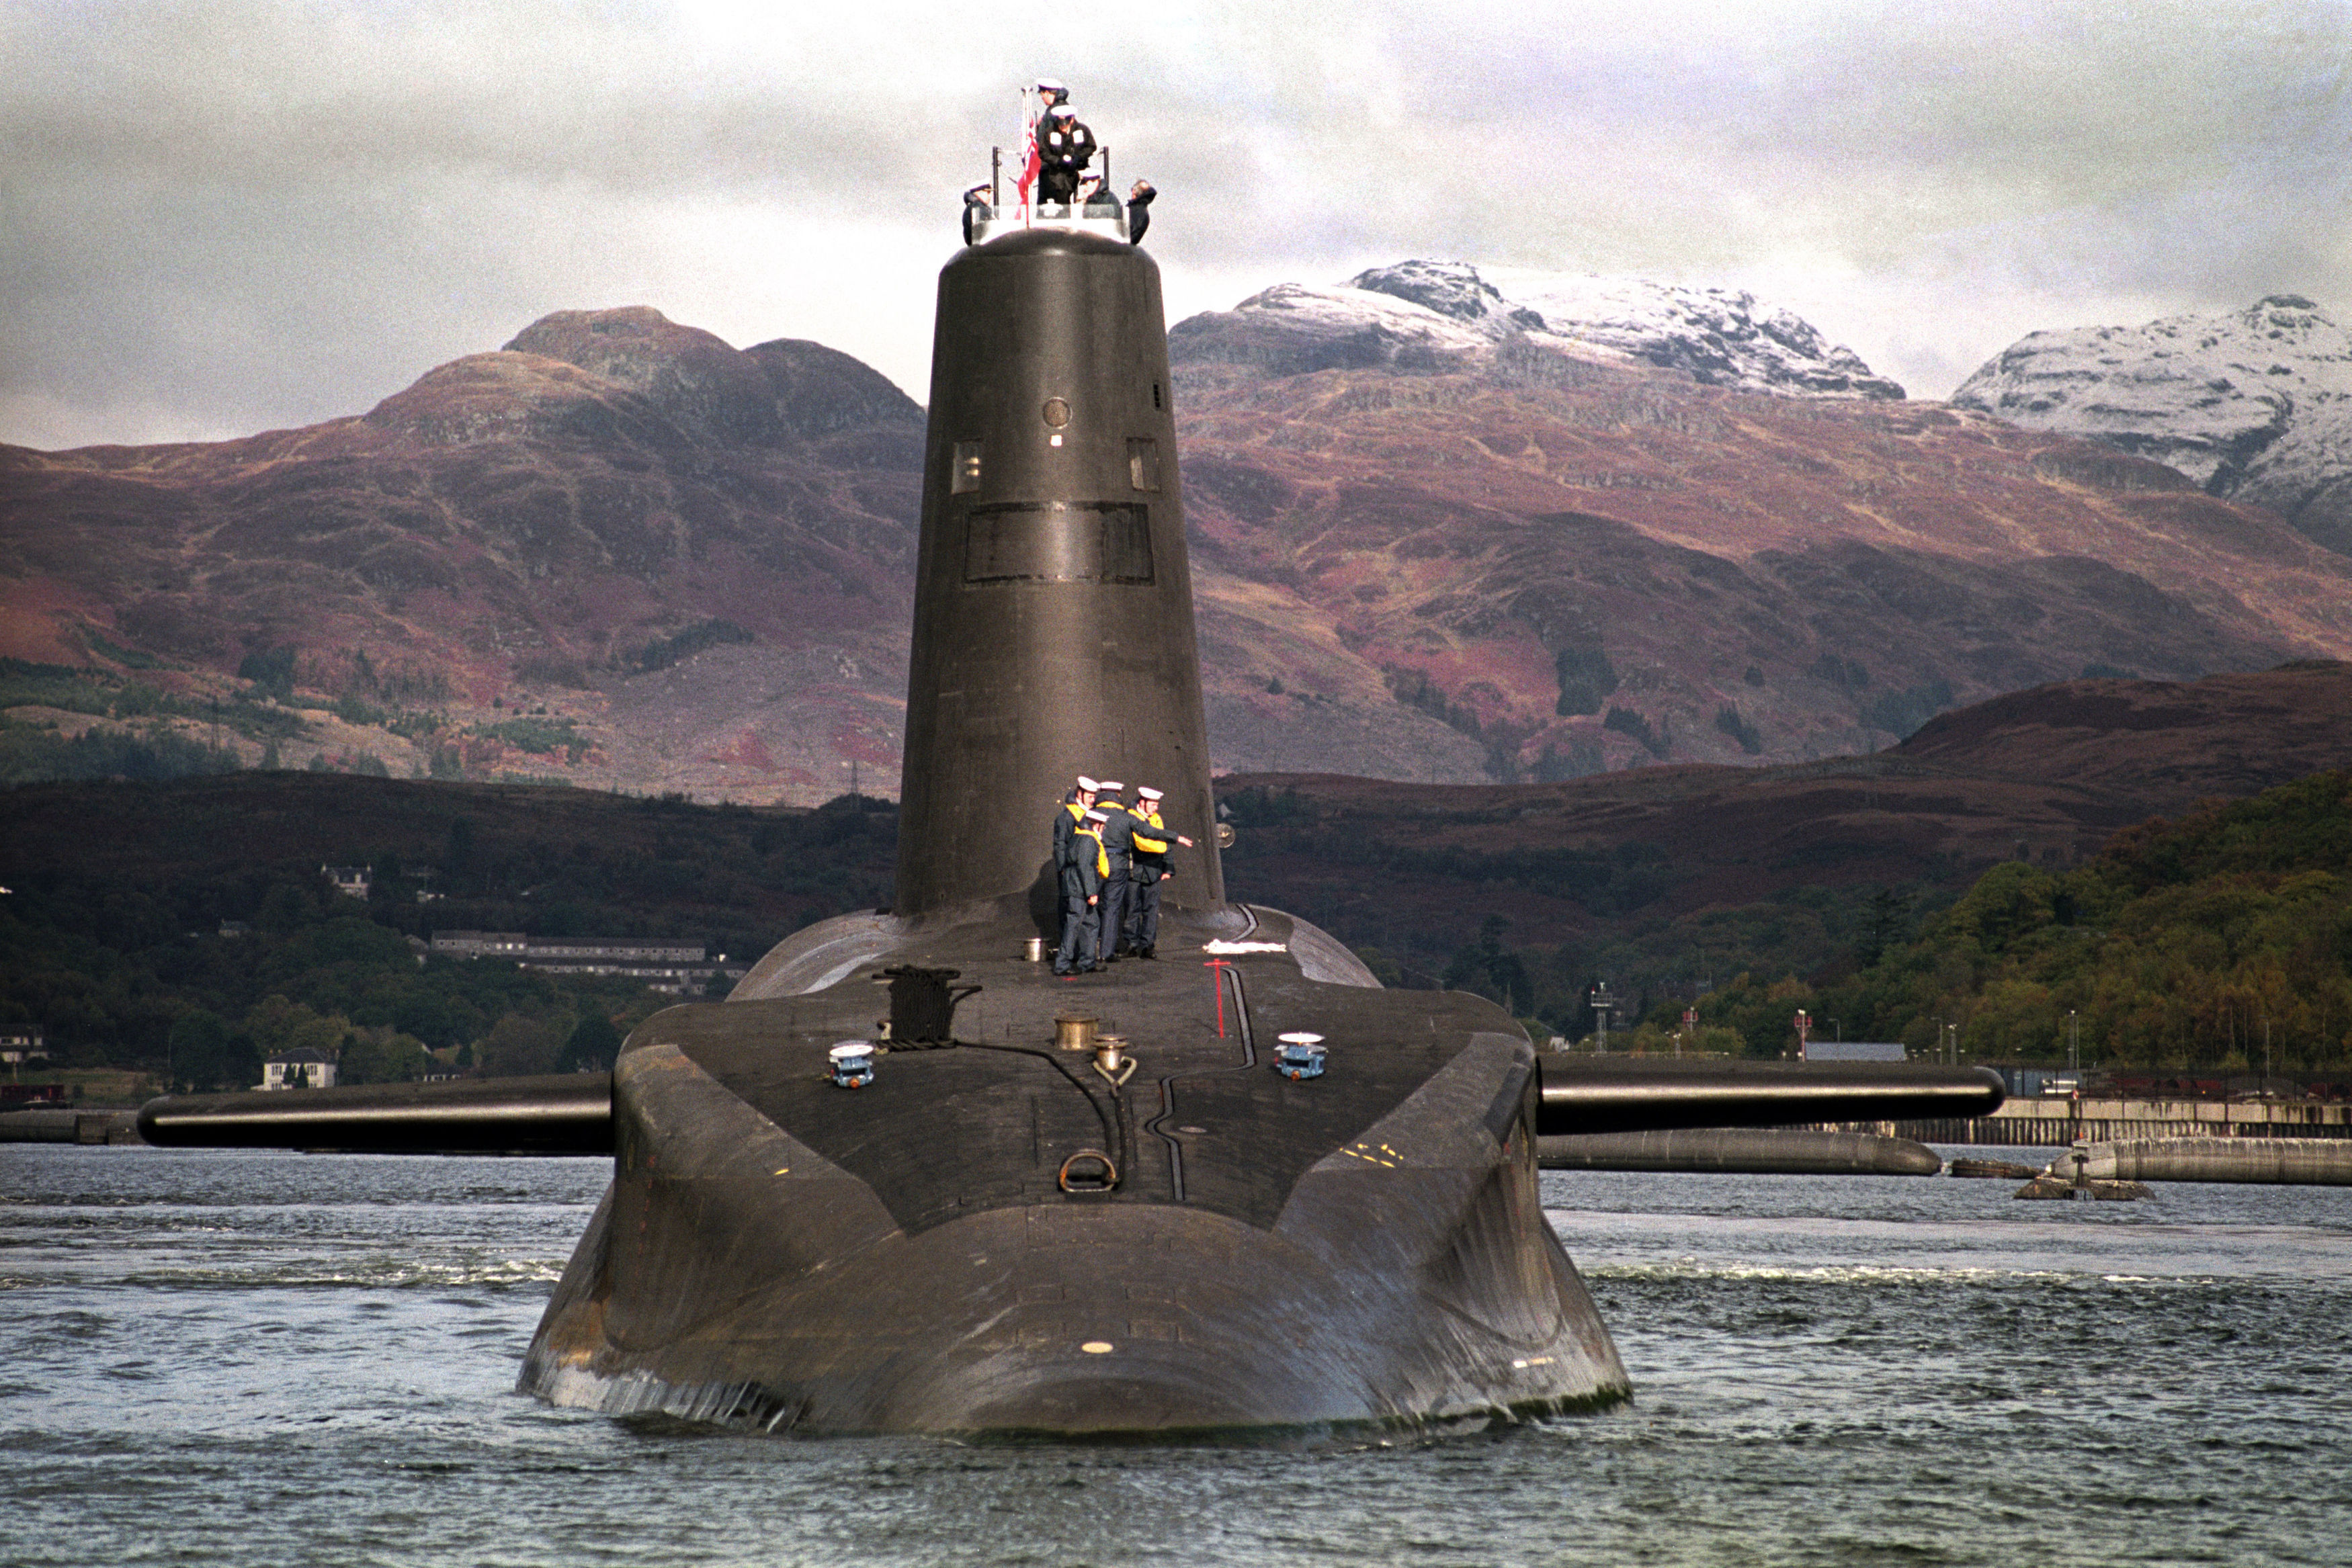 The Royal Navy’s Trident-class nuclear submarine Vanguard